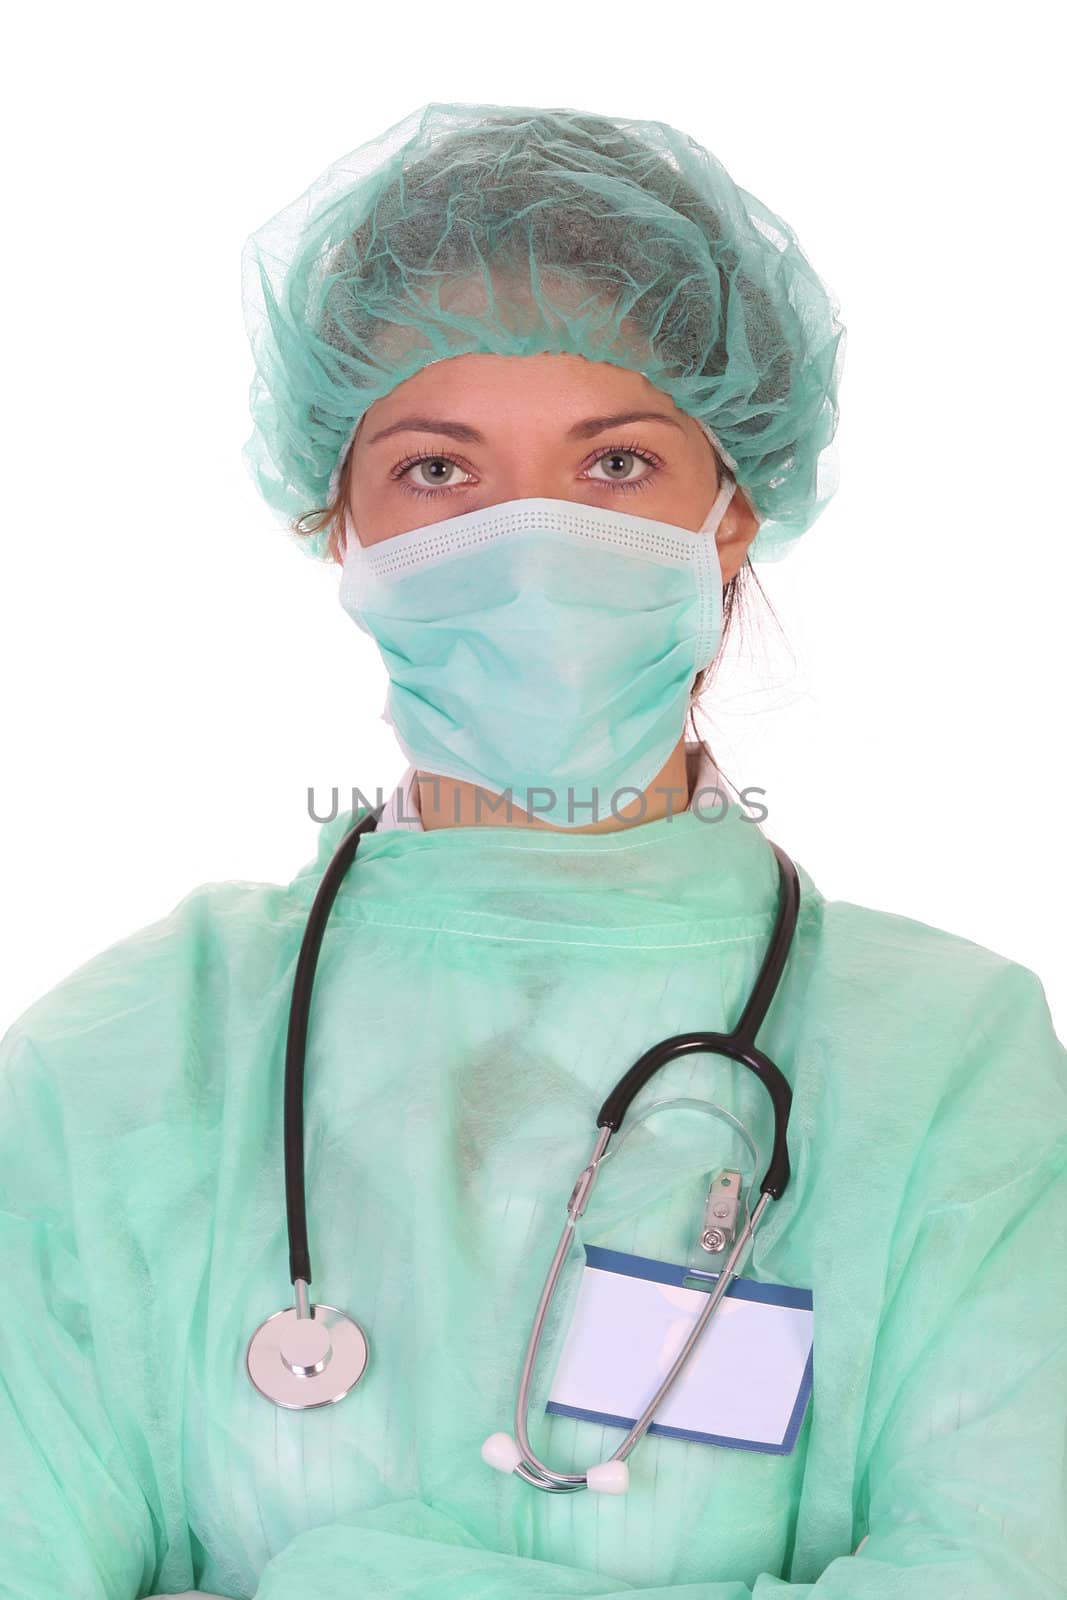 healthcare worker by vladacanon